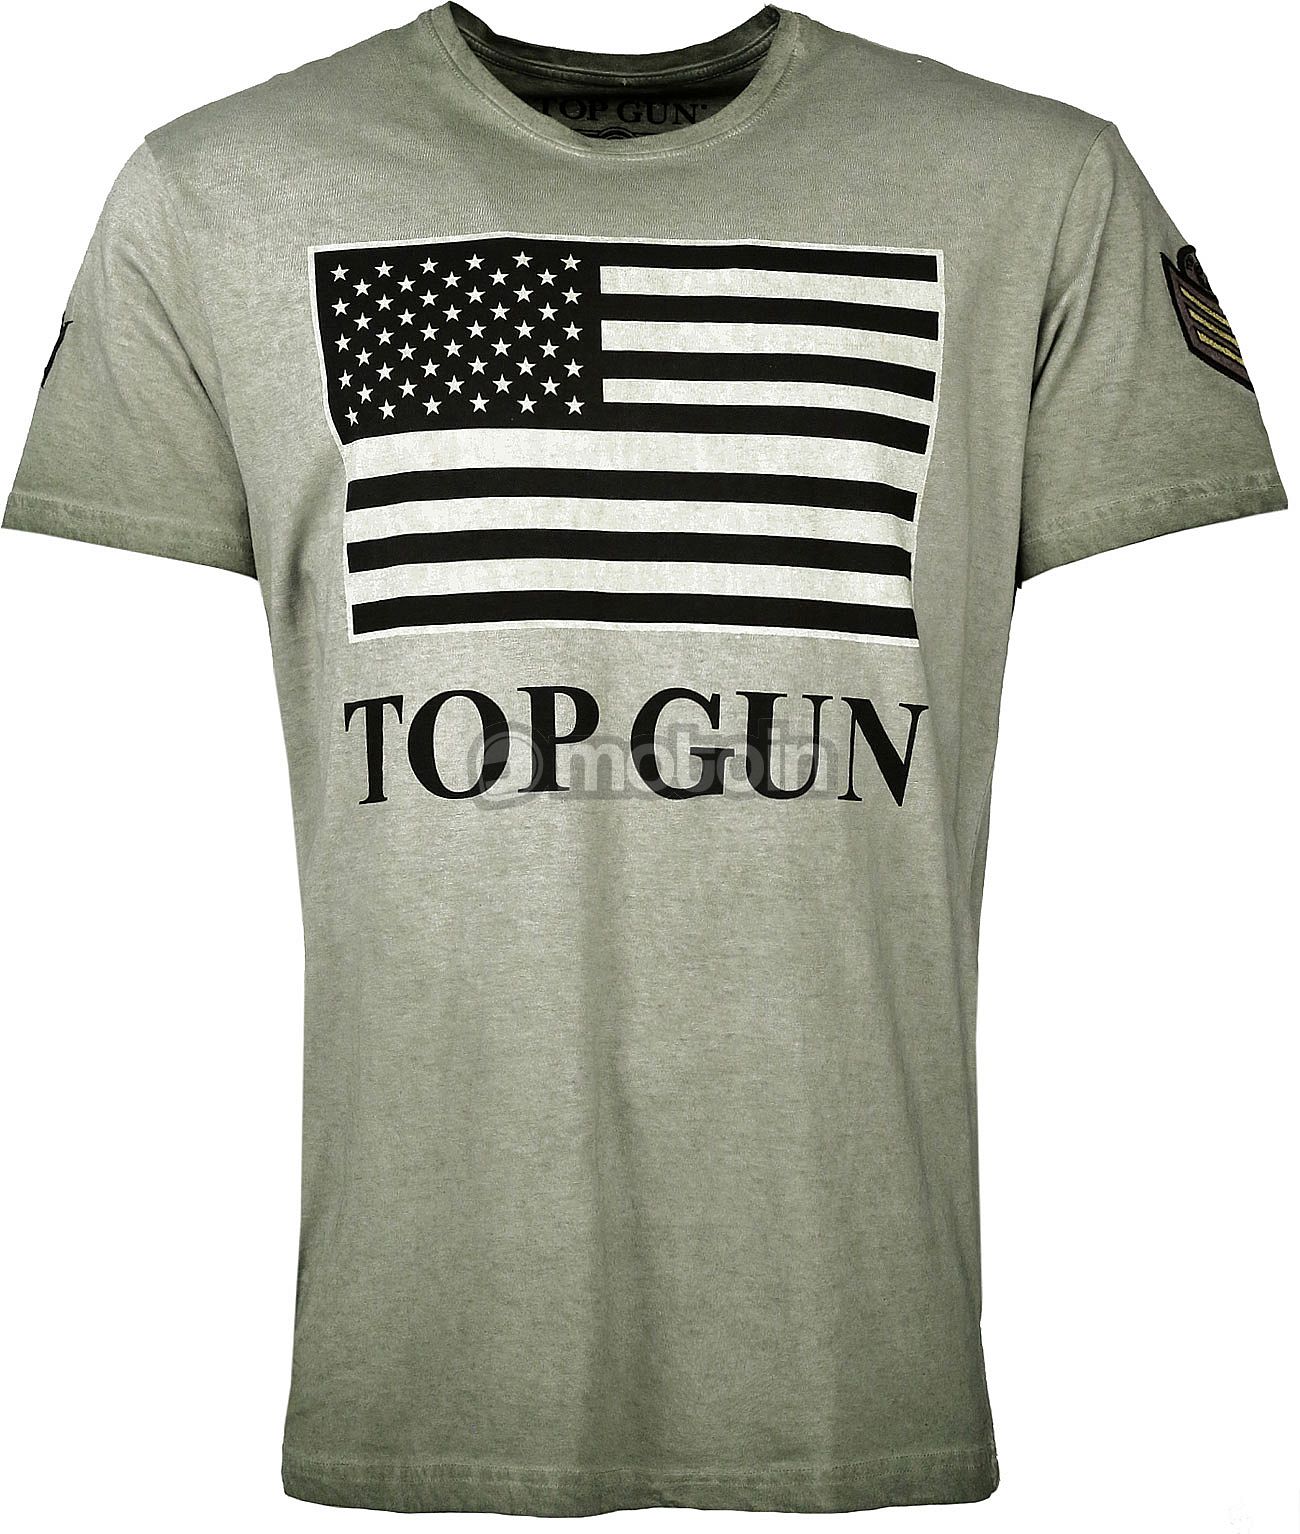 Top Gun Search, t-shirt